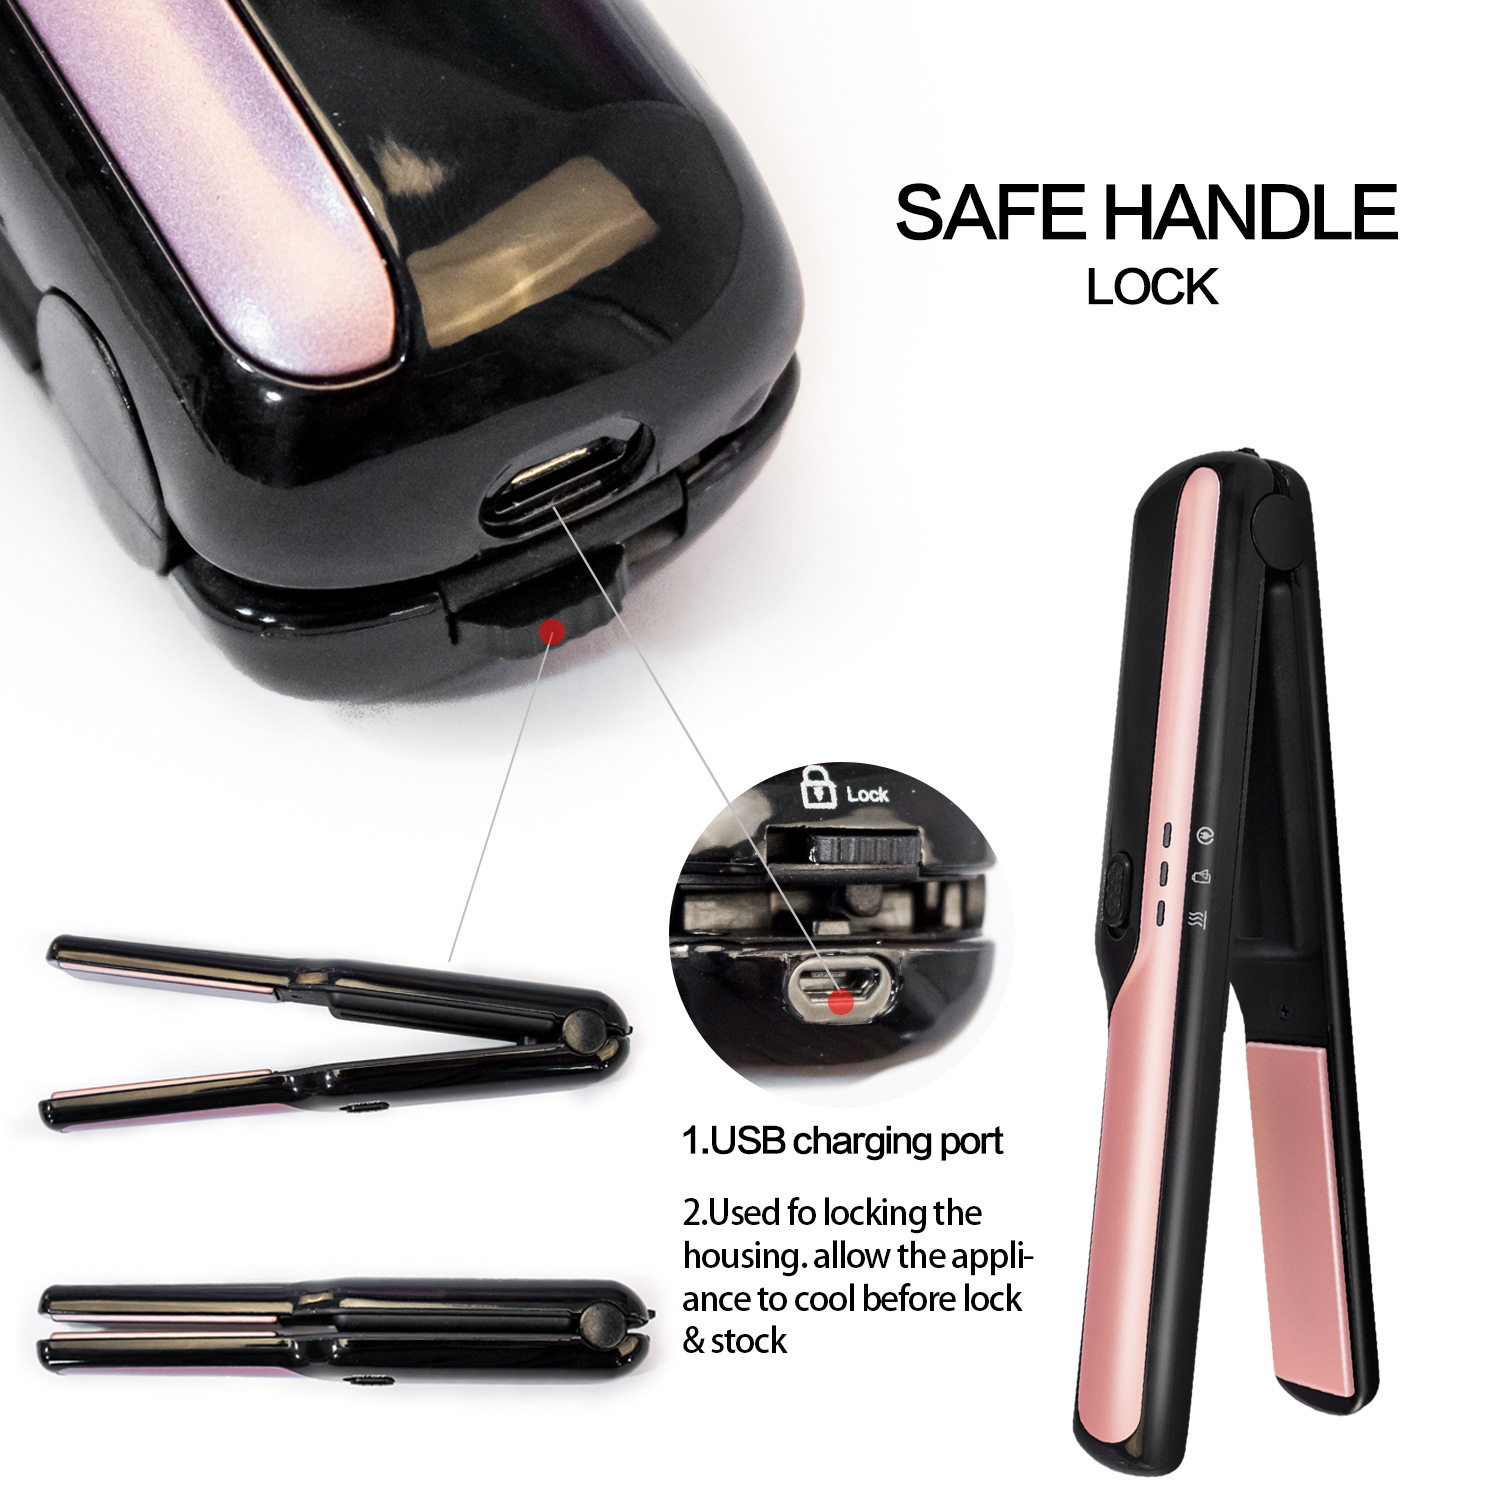 SHAOKE Mini Wireless Haarglätter USB-aufladbar Keramik Nass/Trocken einsetzbar 10 vielseitig Glätteisen, Temperaturstufen